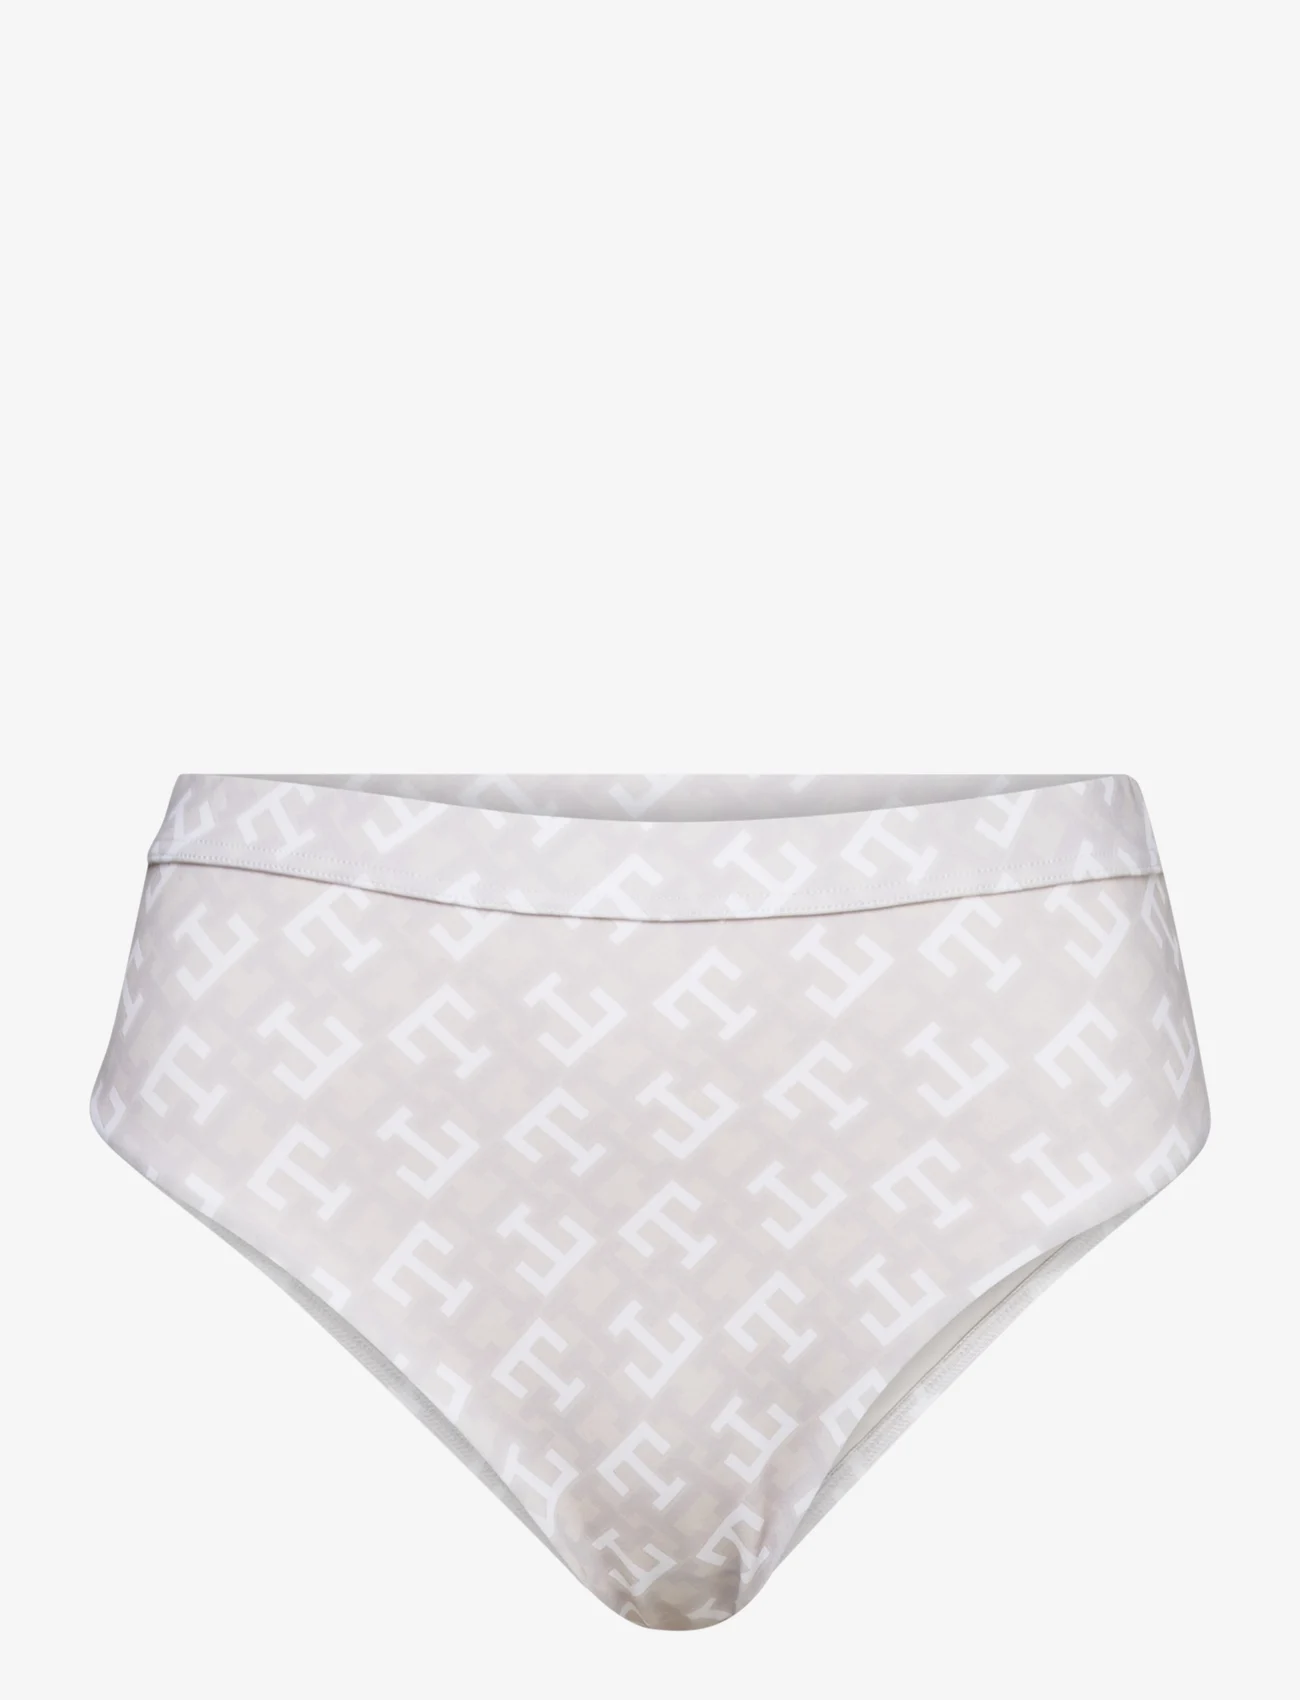 Tommy Hilfiger - HIGH WAIST CHEEKY BIKINI PRINT - bikinibroekjes met hoge taille - wsw amd monogram white - 0